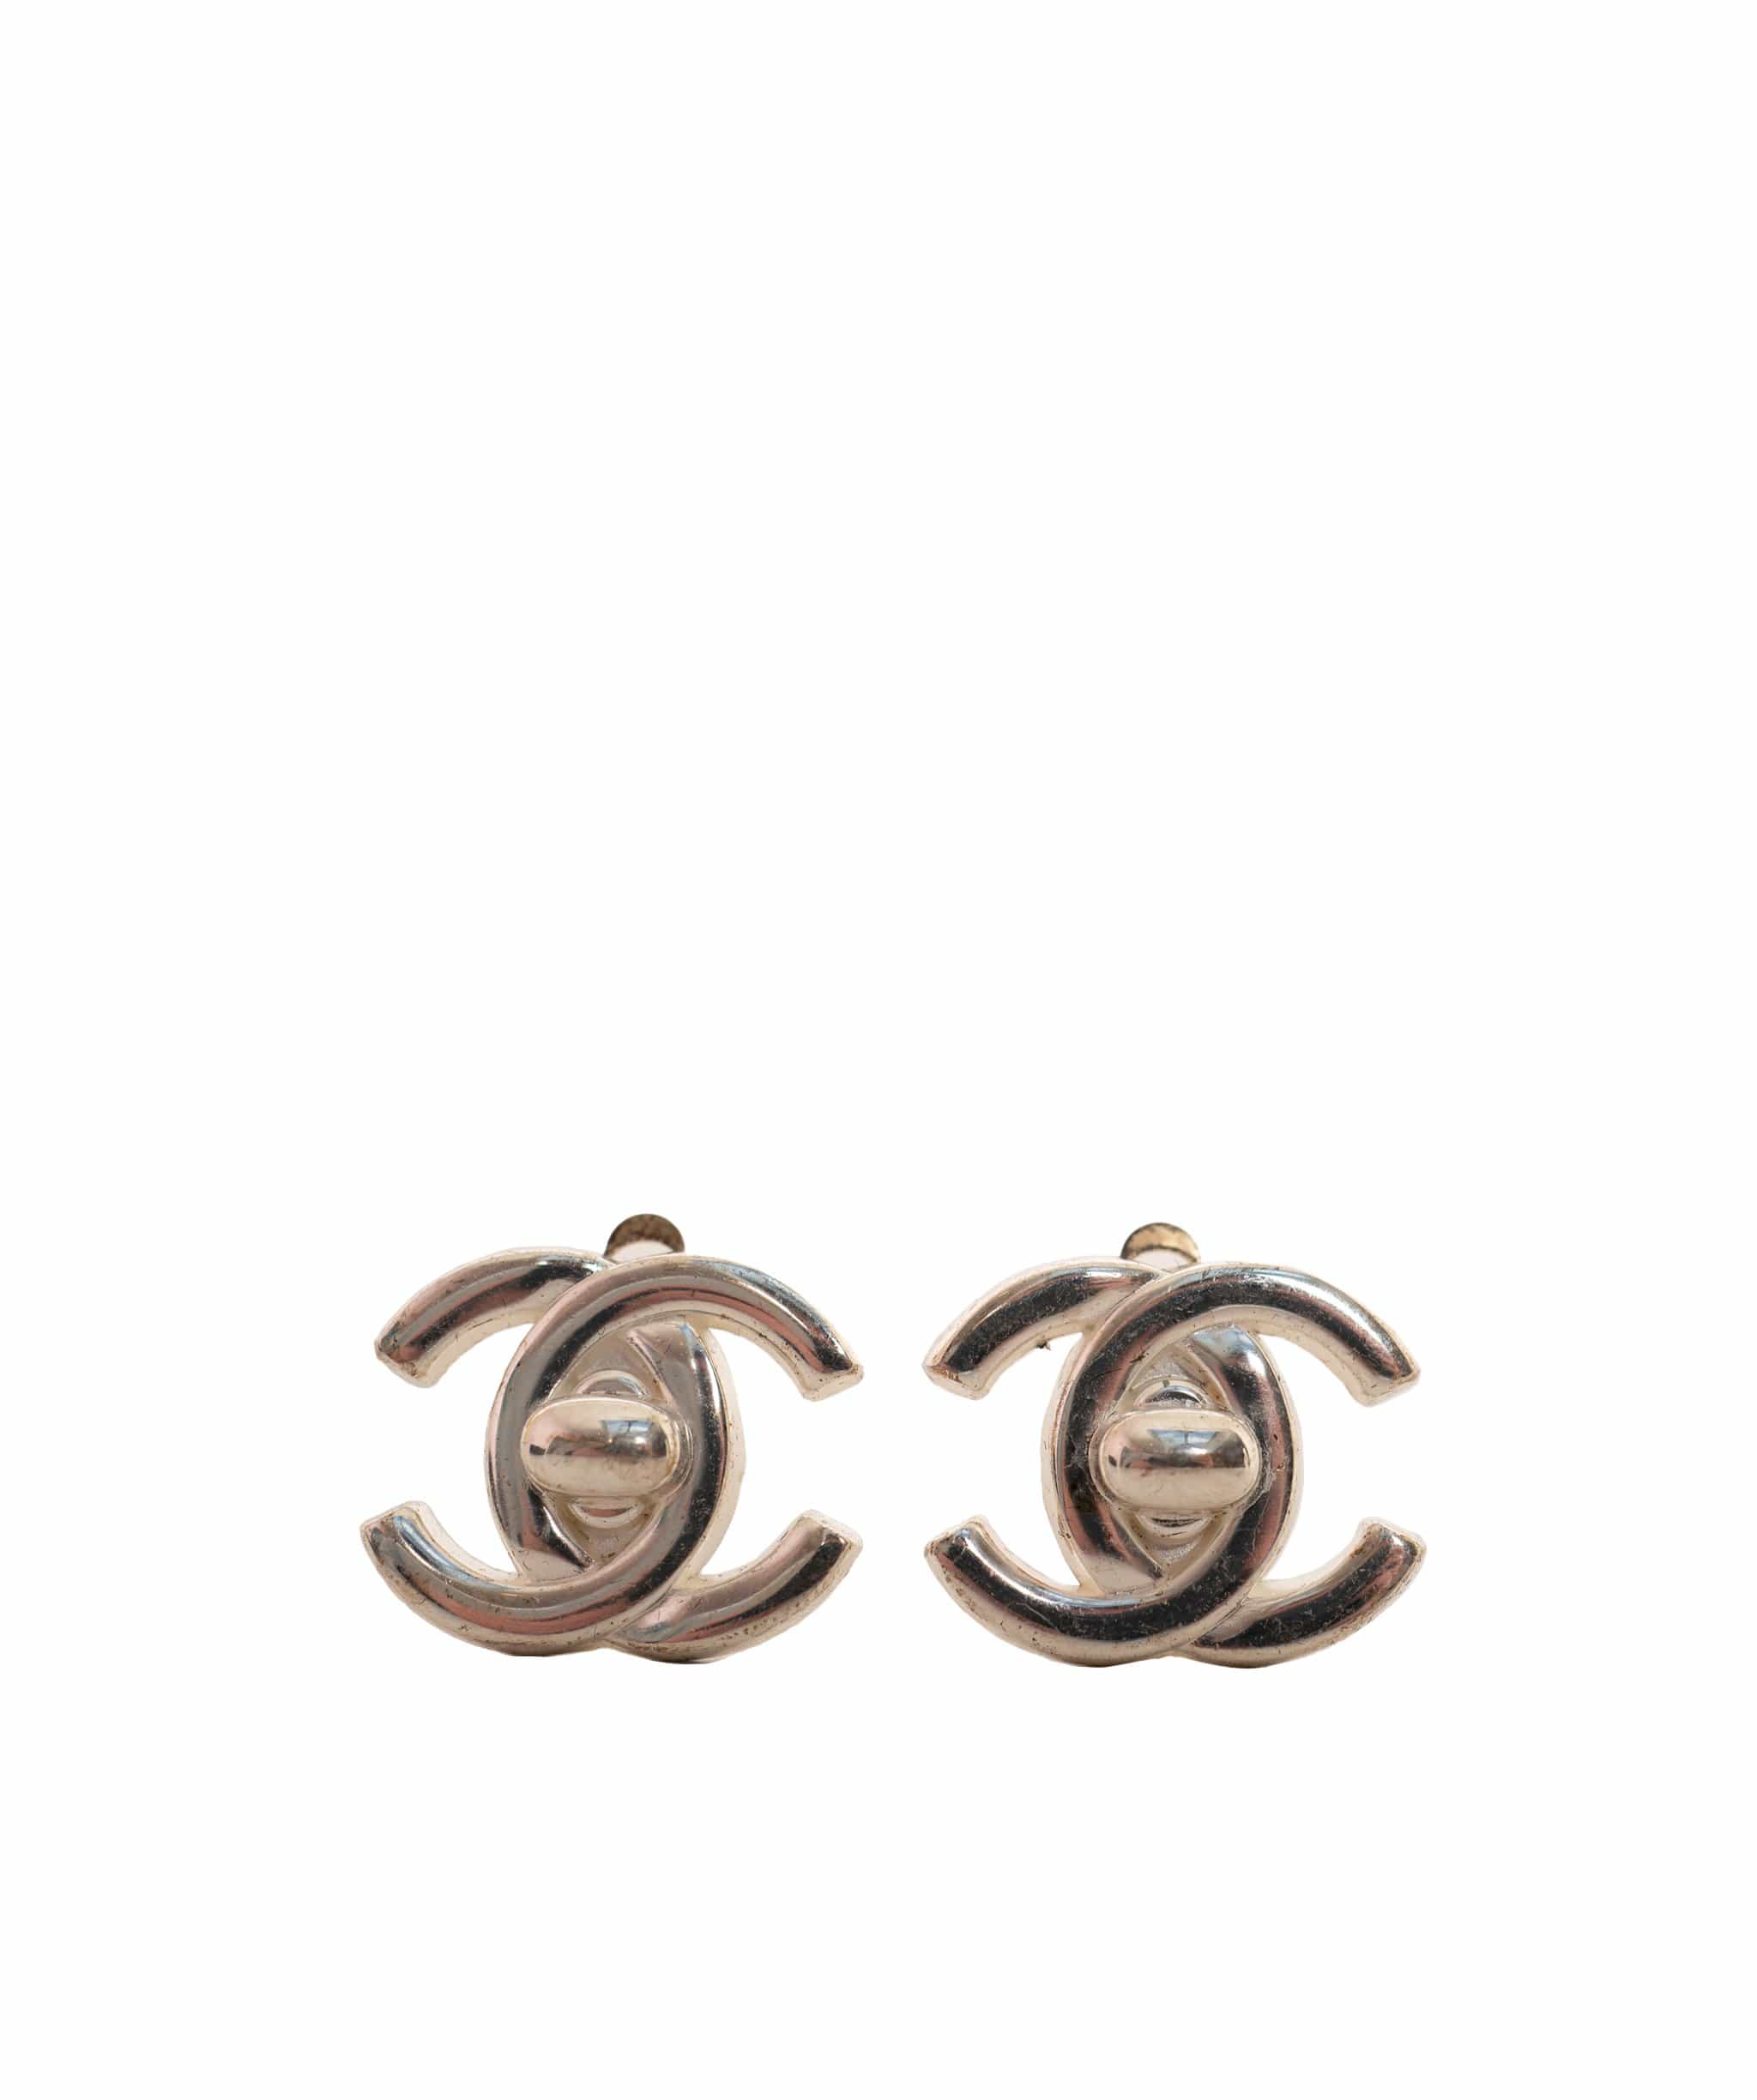 Chanel Chanel turnstile earrings ASL1123